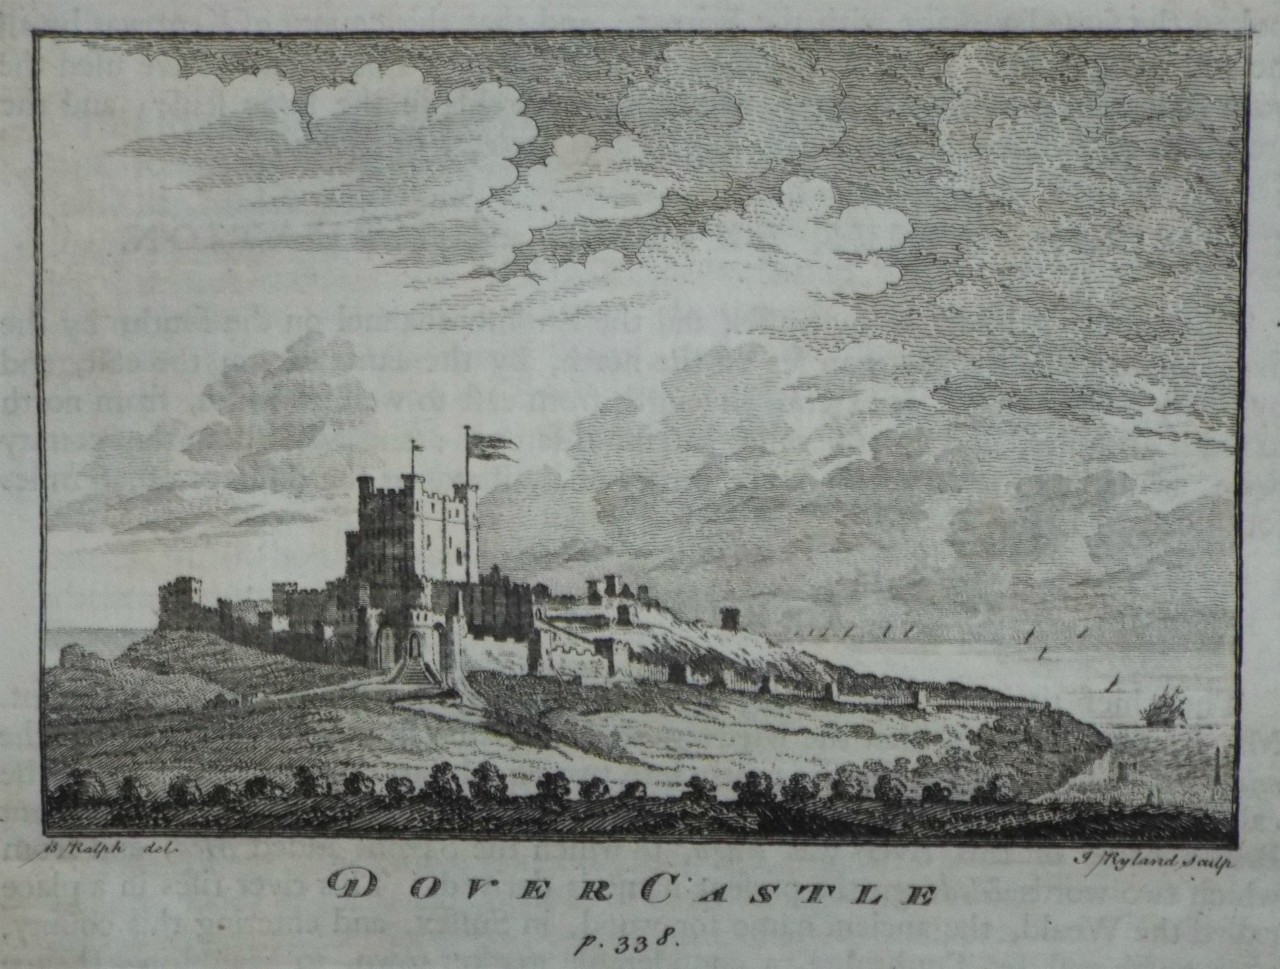 Print - Dover Castle p.338. - Ryland